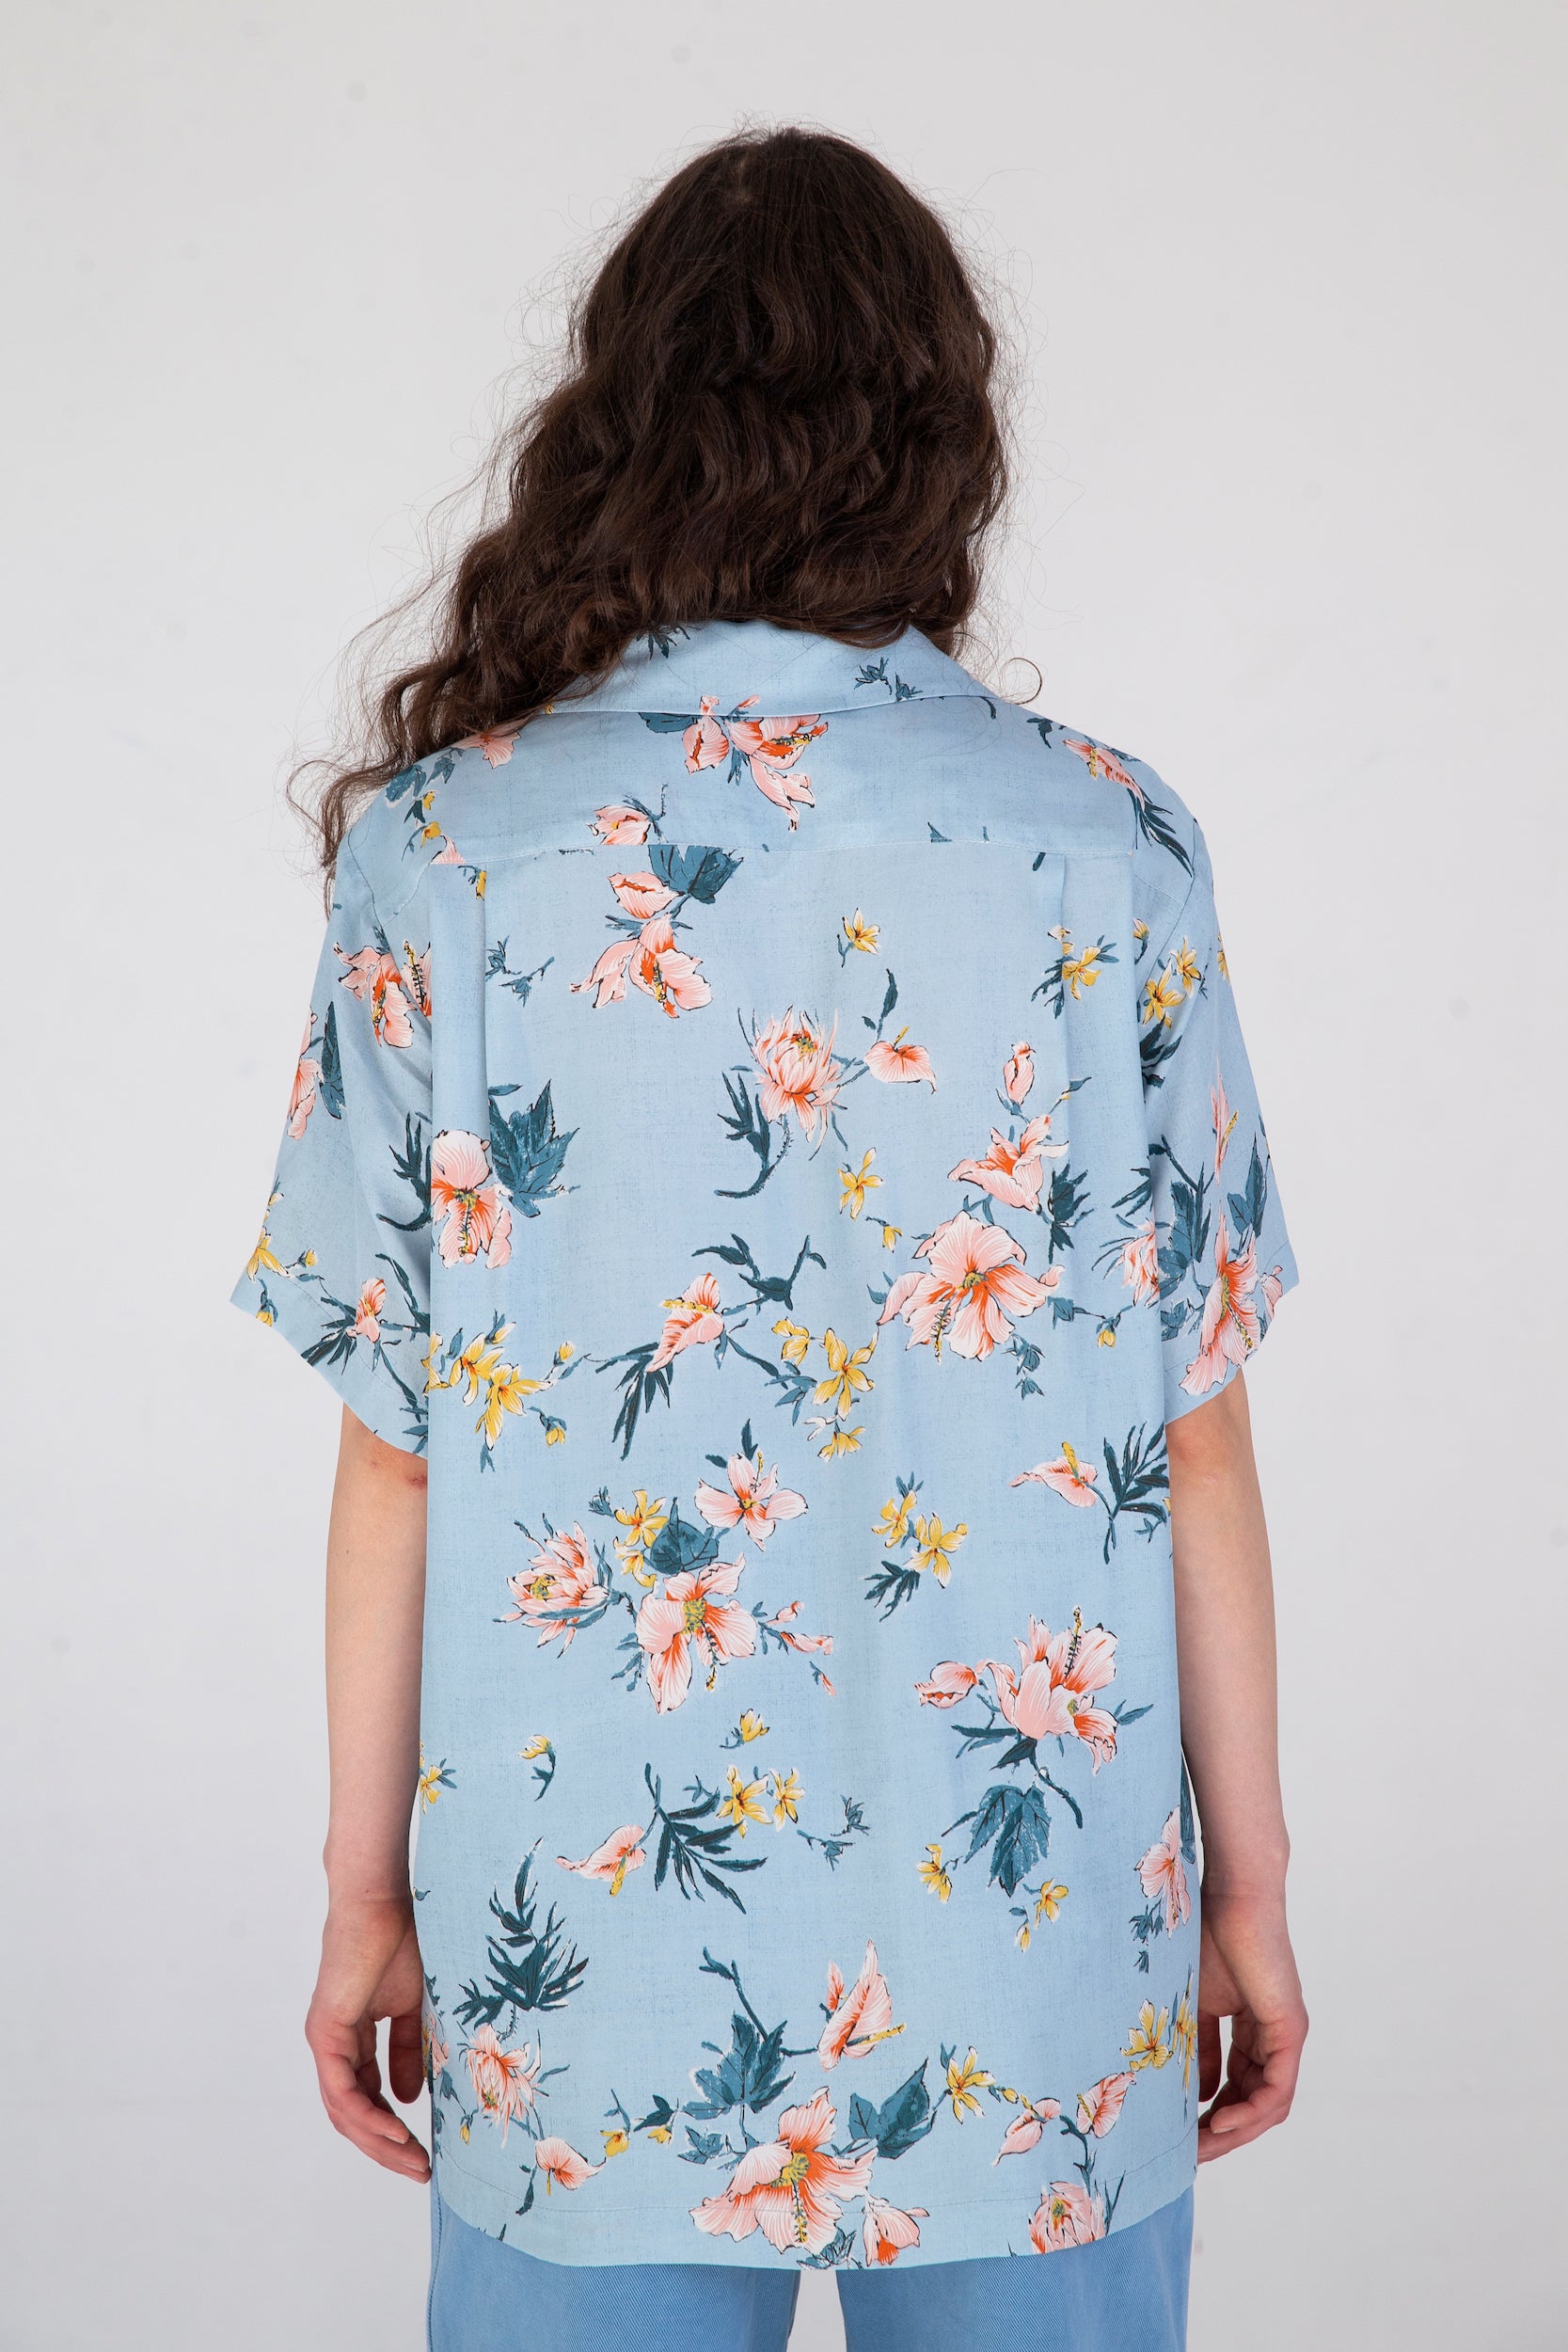 back view of floral print light blue shirt